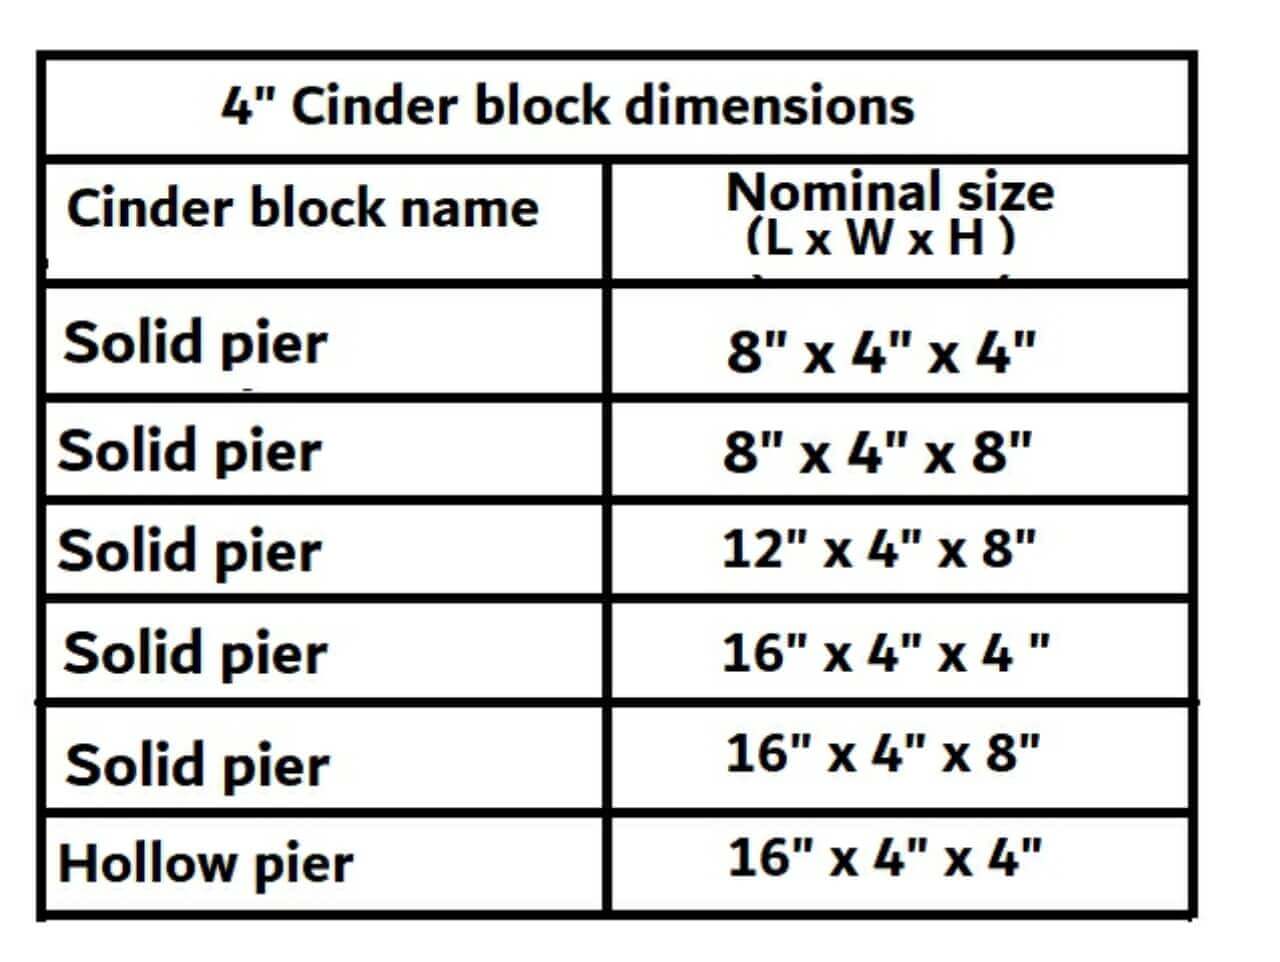 4" cinder block dimensions